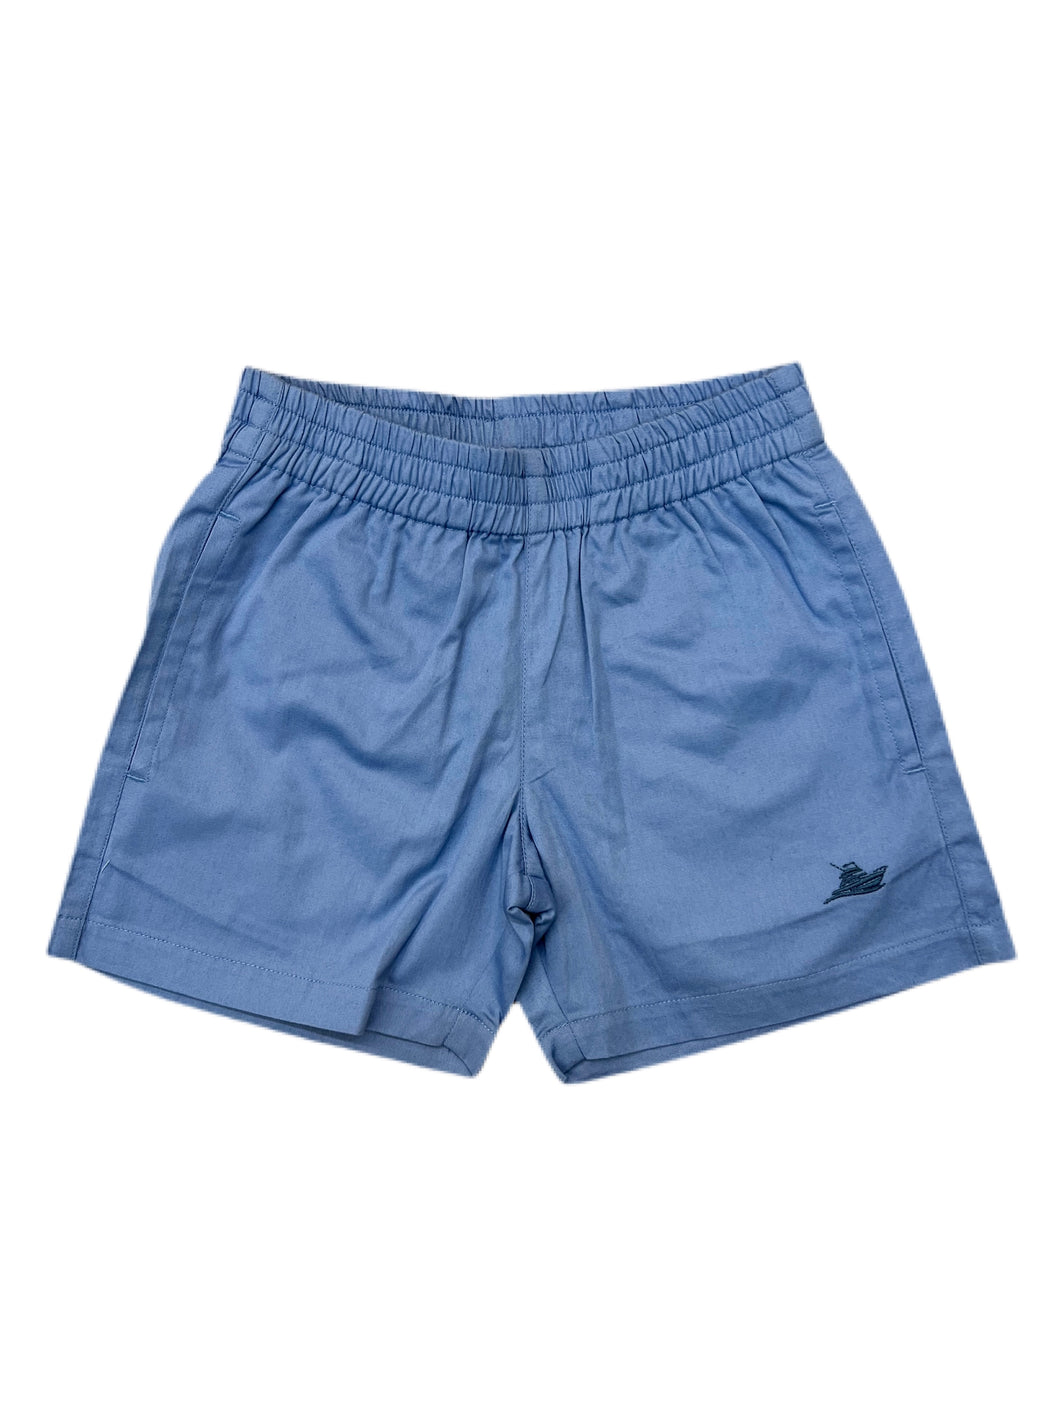 Southbound Regatta Blue Twill Shorts